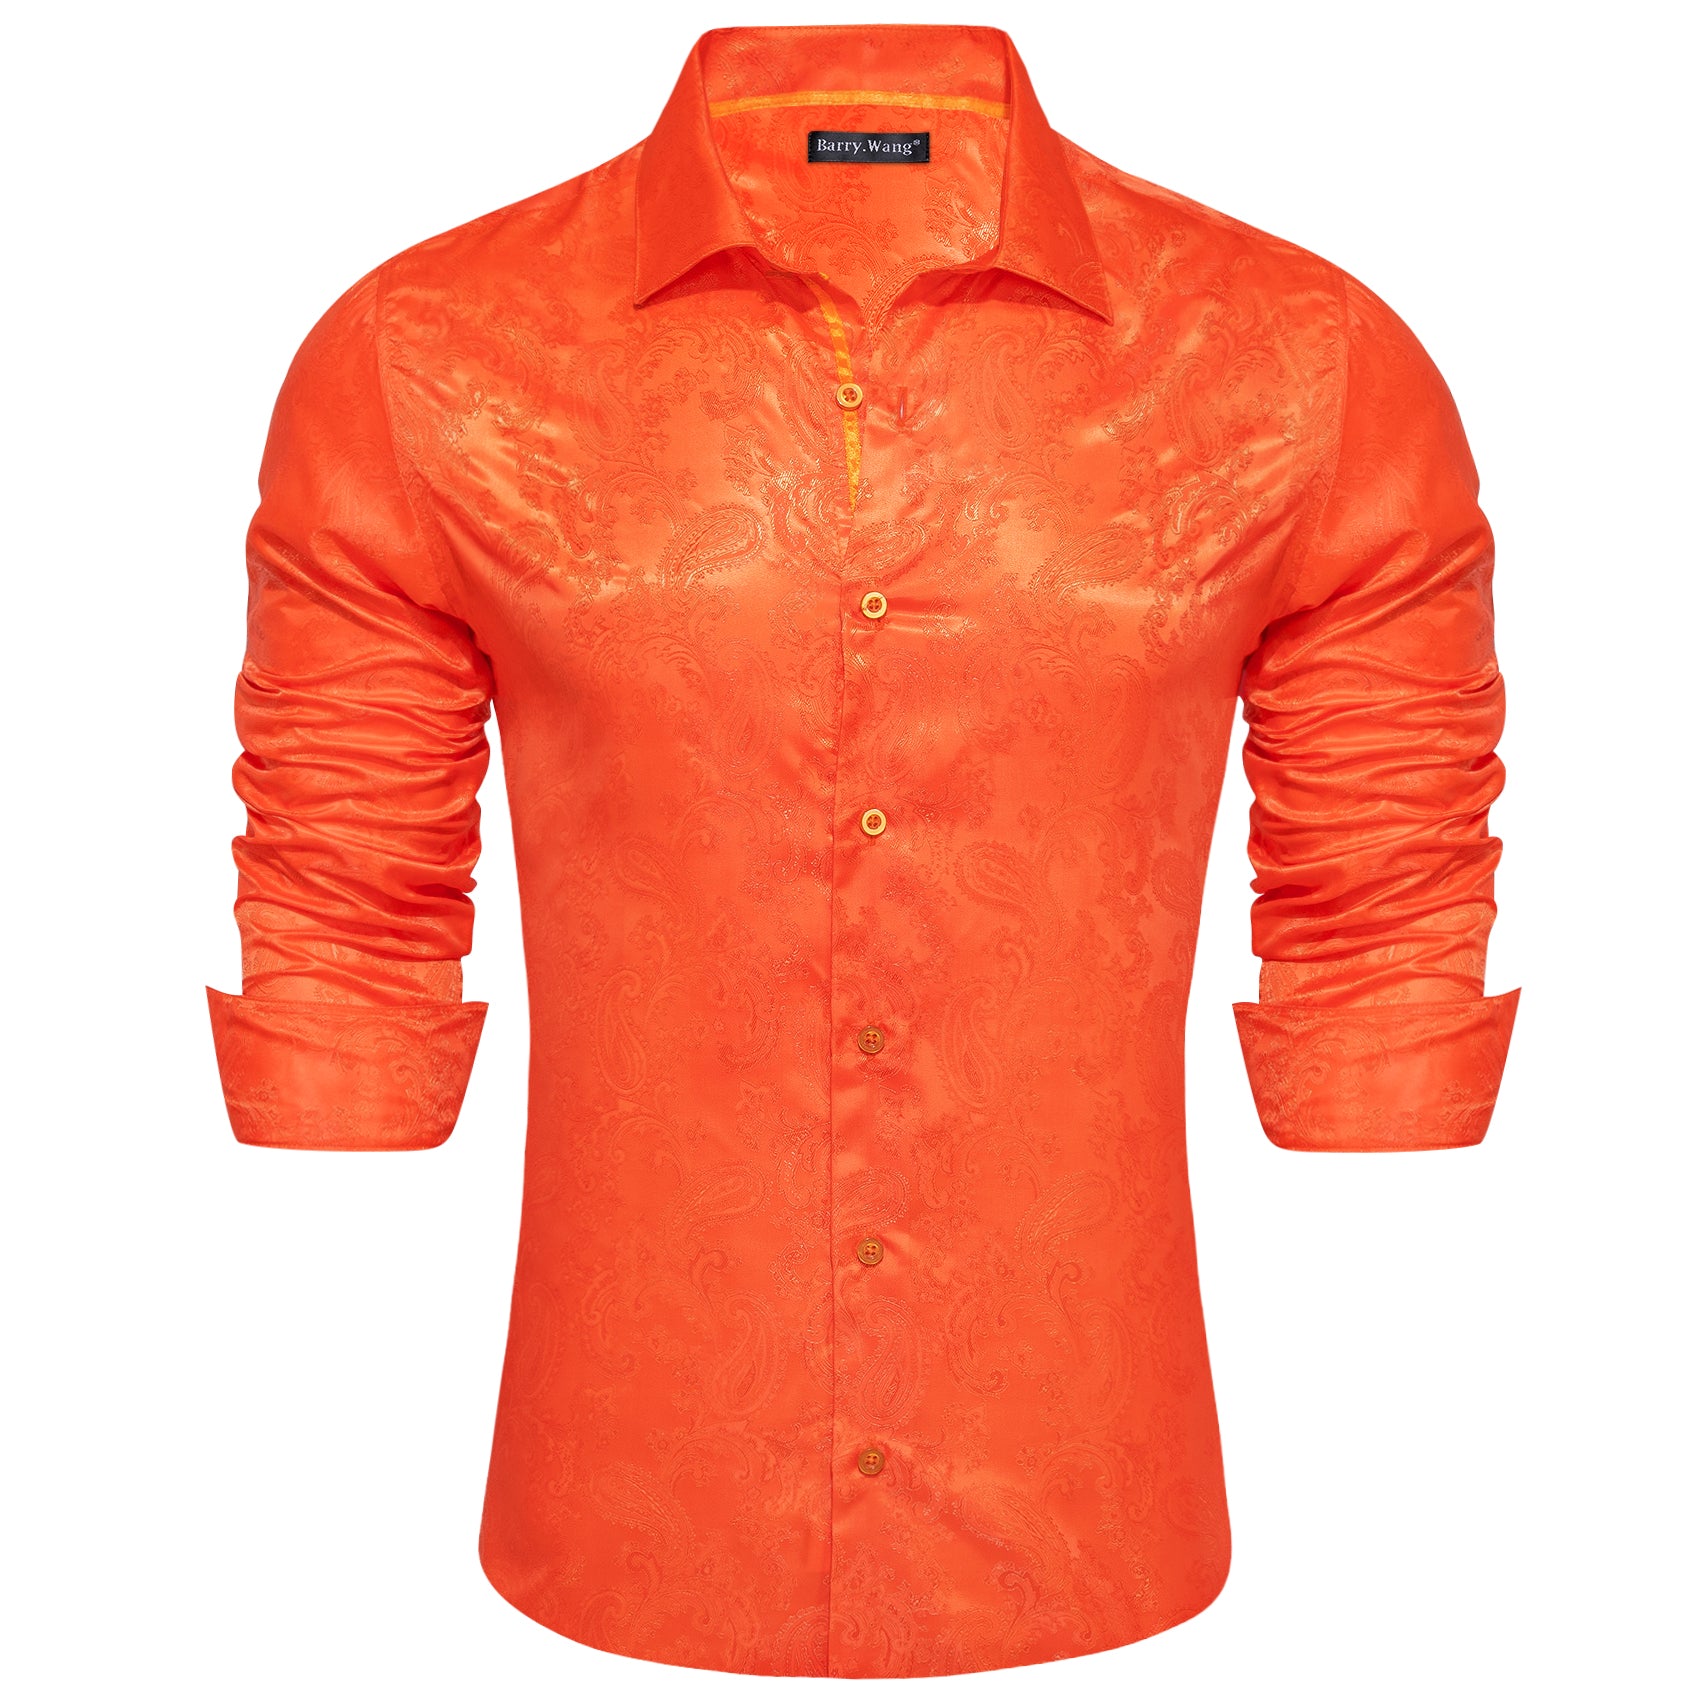 Barry.wang Orange Paisley Silk Men's Shirt